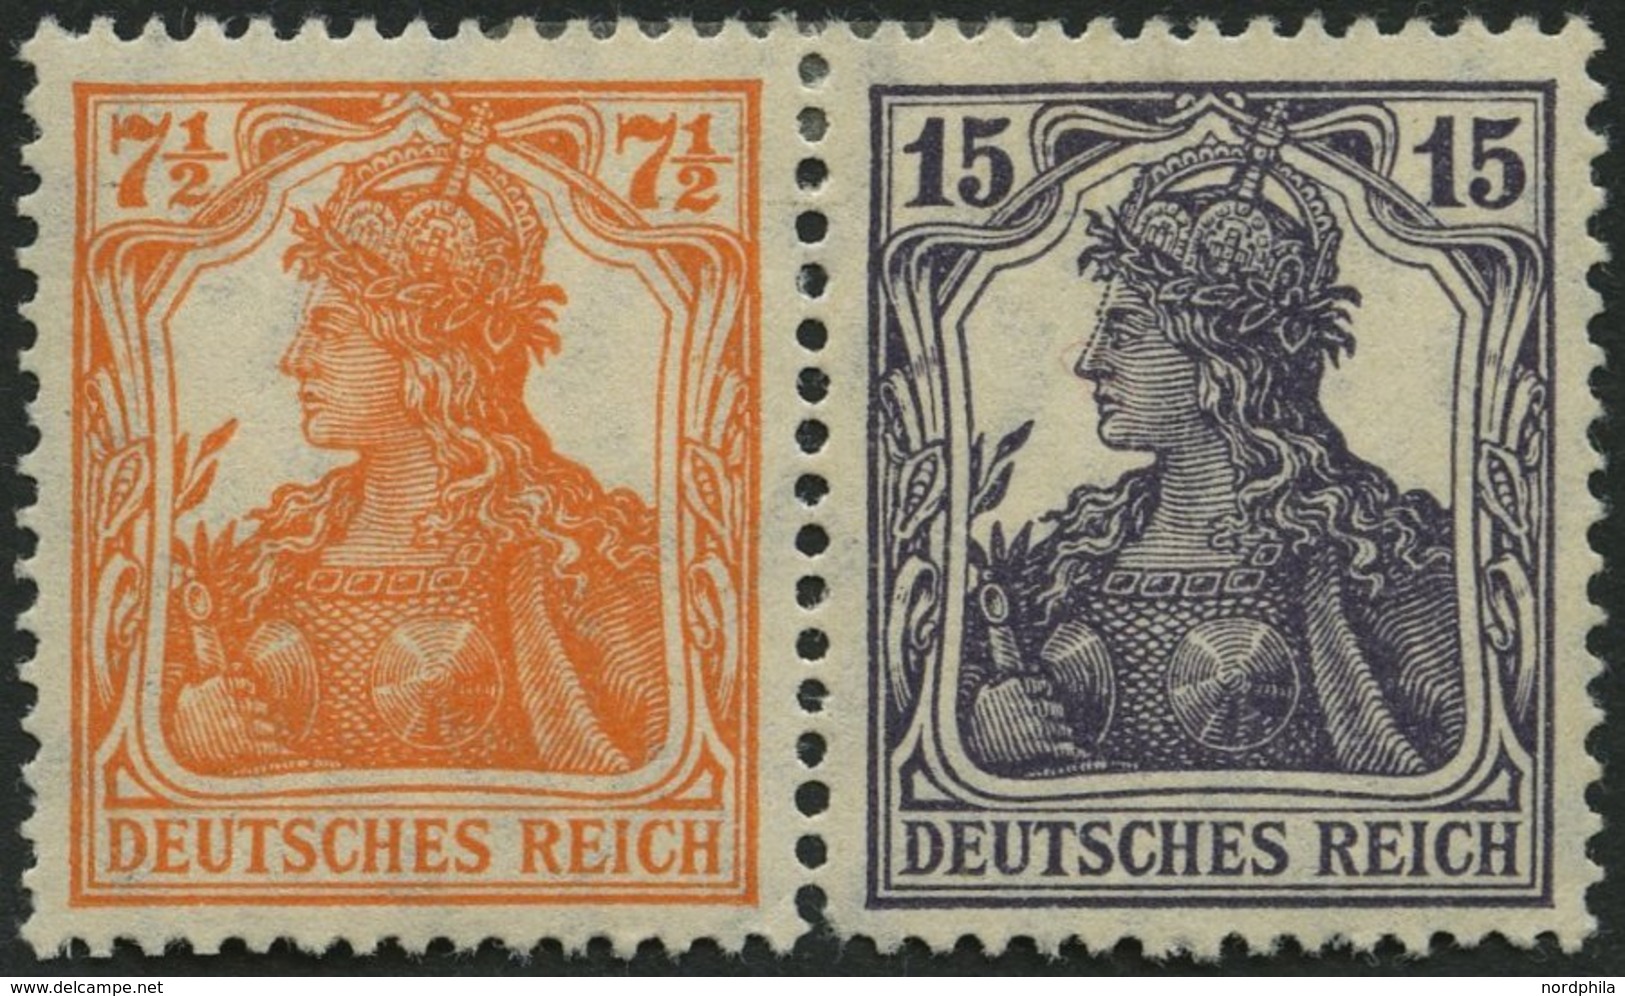 ZUSAMMENDRUCKE W 11ba *, 1917, Germania 71/2 + 15, Falzrest, Feinst, Mi. 230.- - Se-Tenant